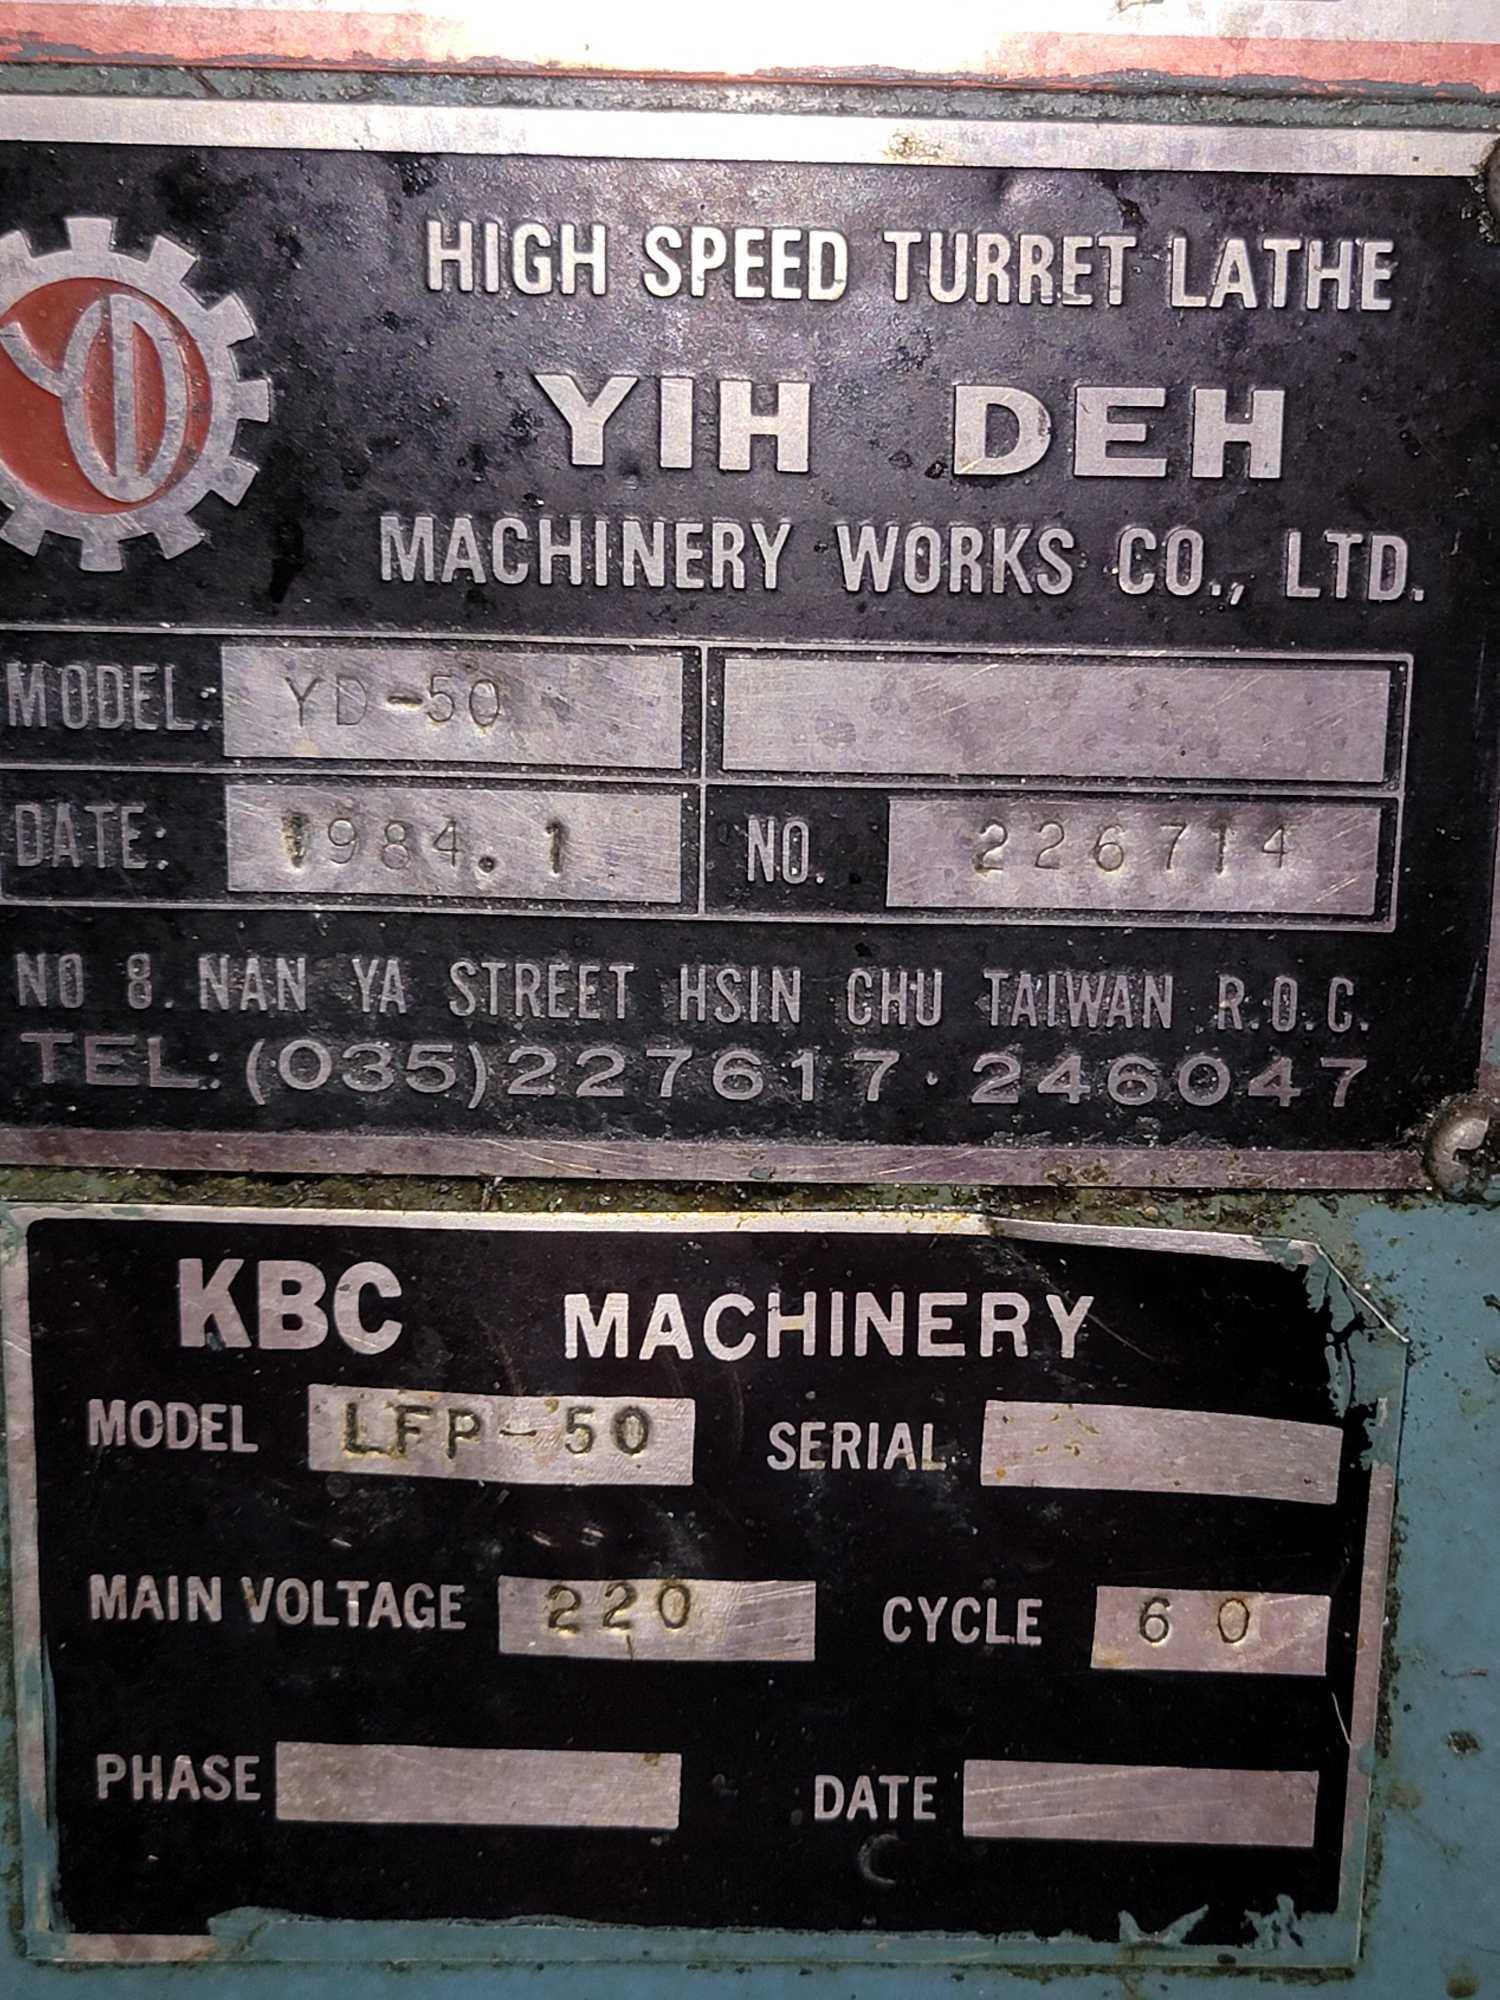 KBC Machinery Turret Lathe 1984.1 LFP-50